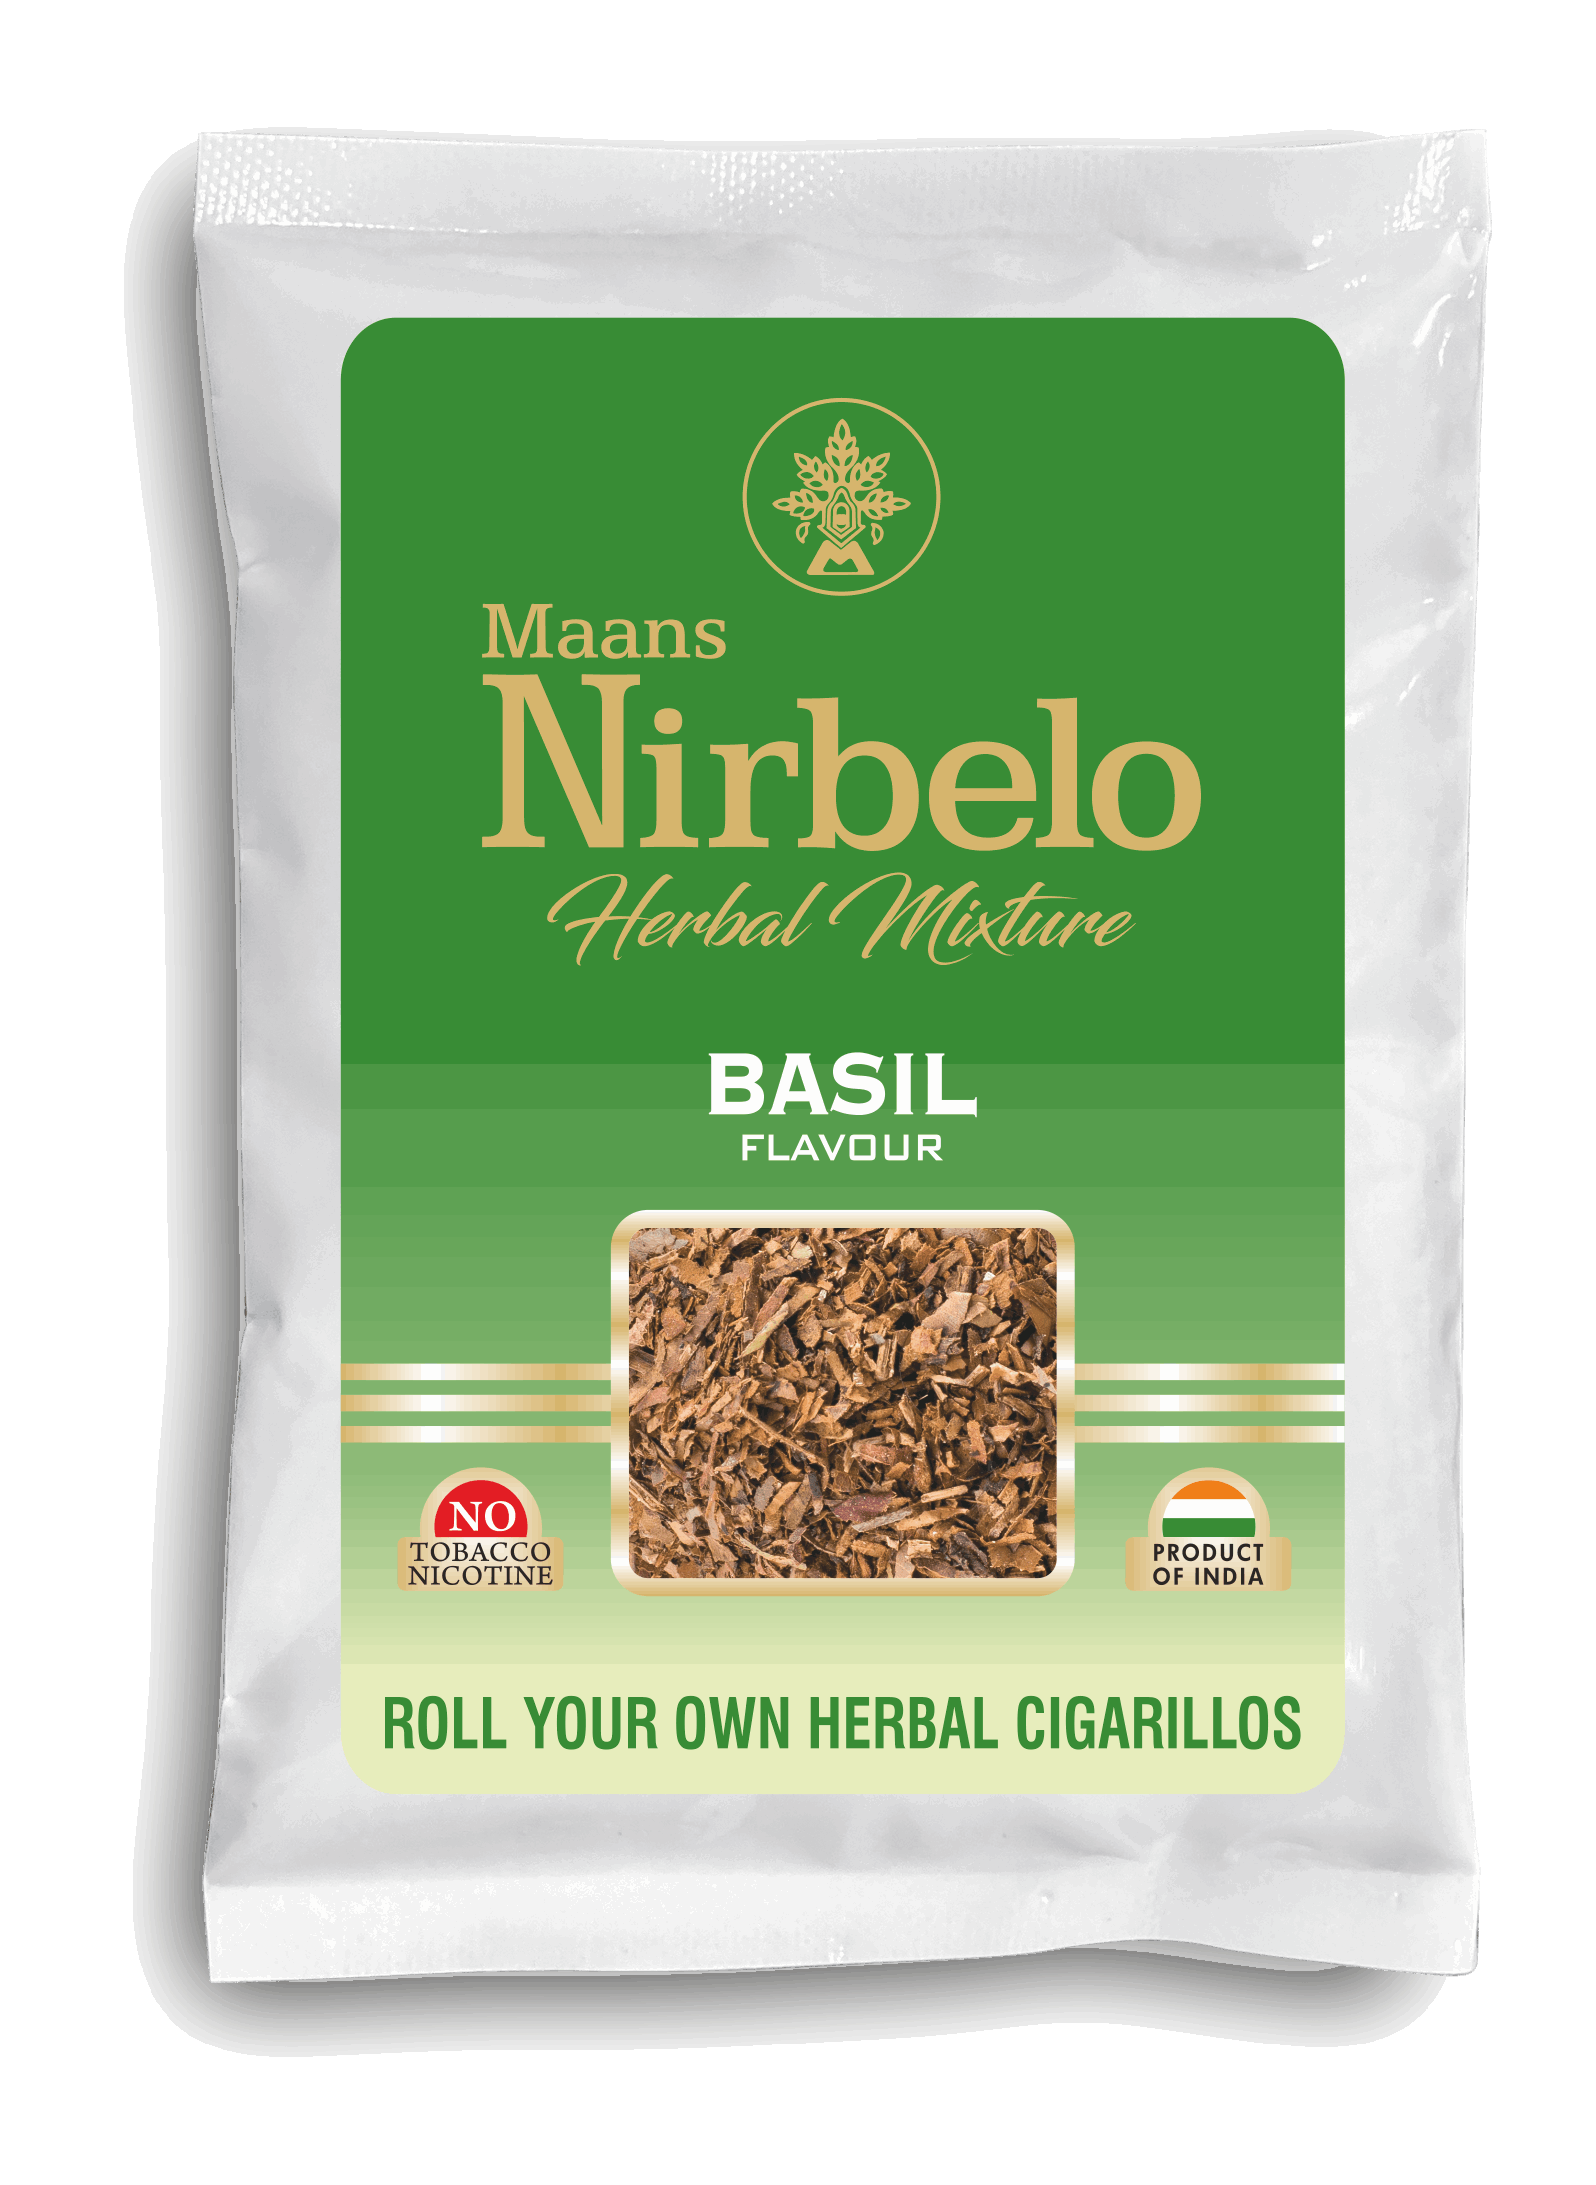 Nirbelo Herbal Raw Mixture Basil Flavor 100% Tobacco Free & Nicotine Free Natural Organic Ingredients for Quit Smoking & Nature's Alternative to Tobacco